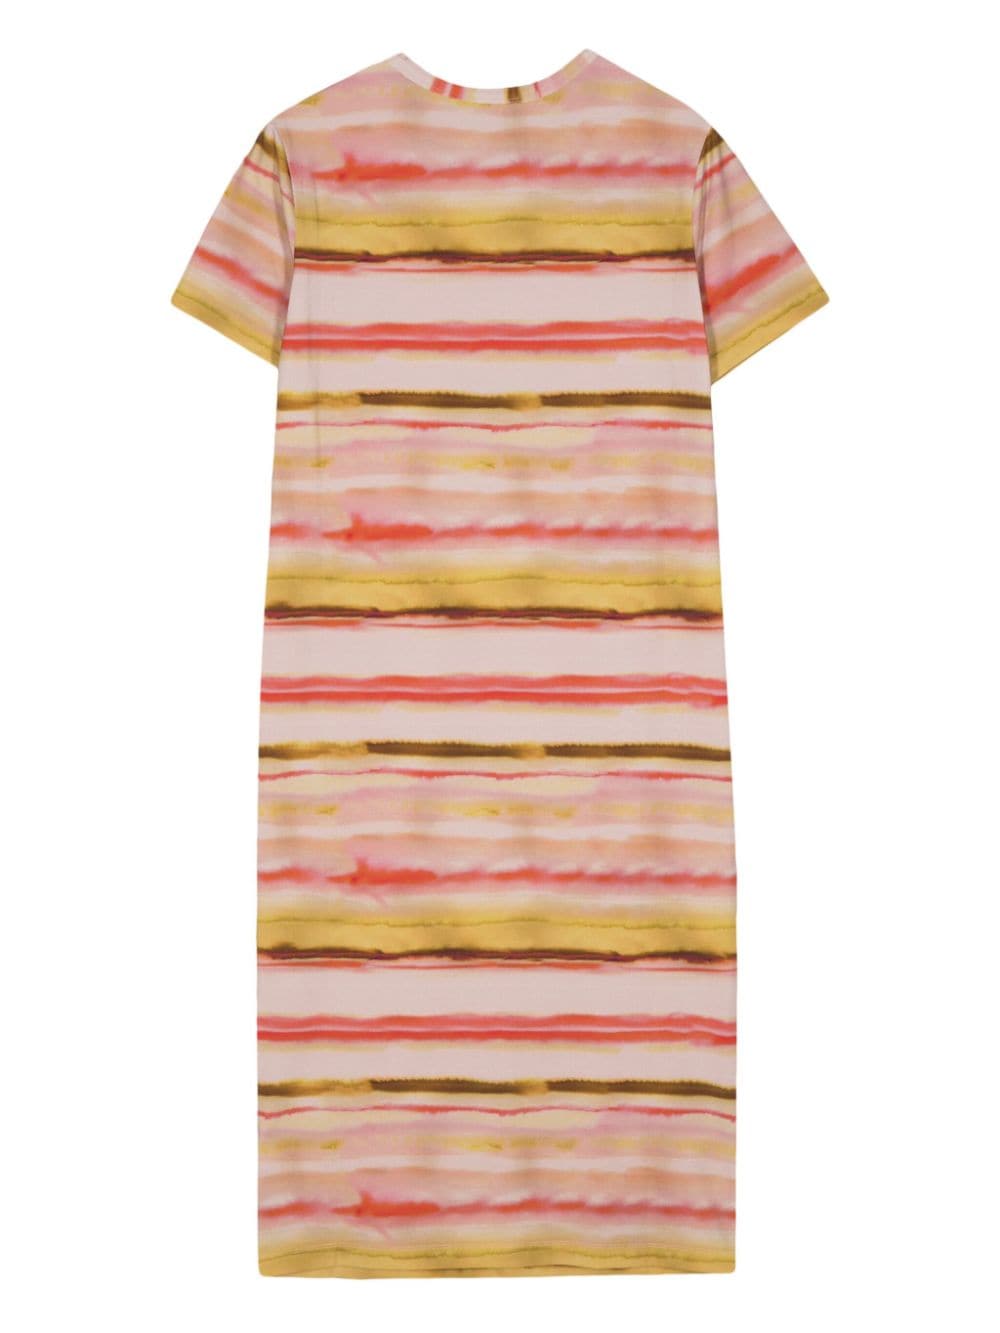 PS Paul Smith Sunray striped T-shirt dress - Roze